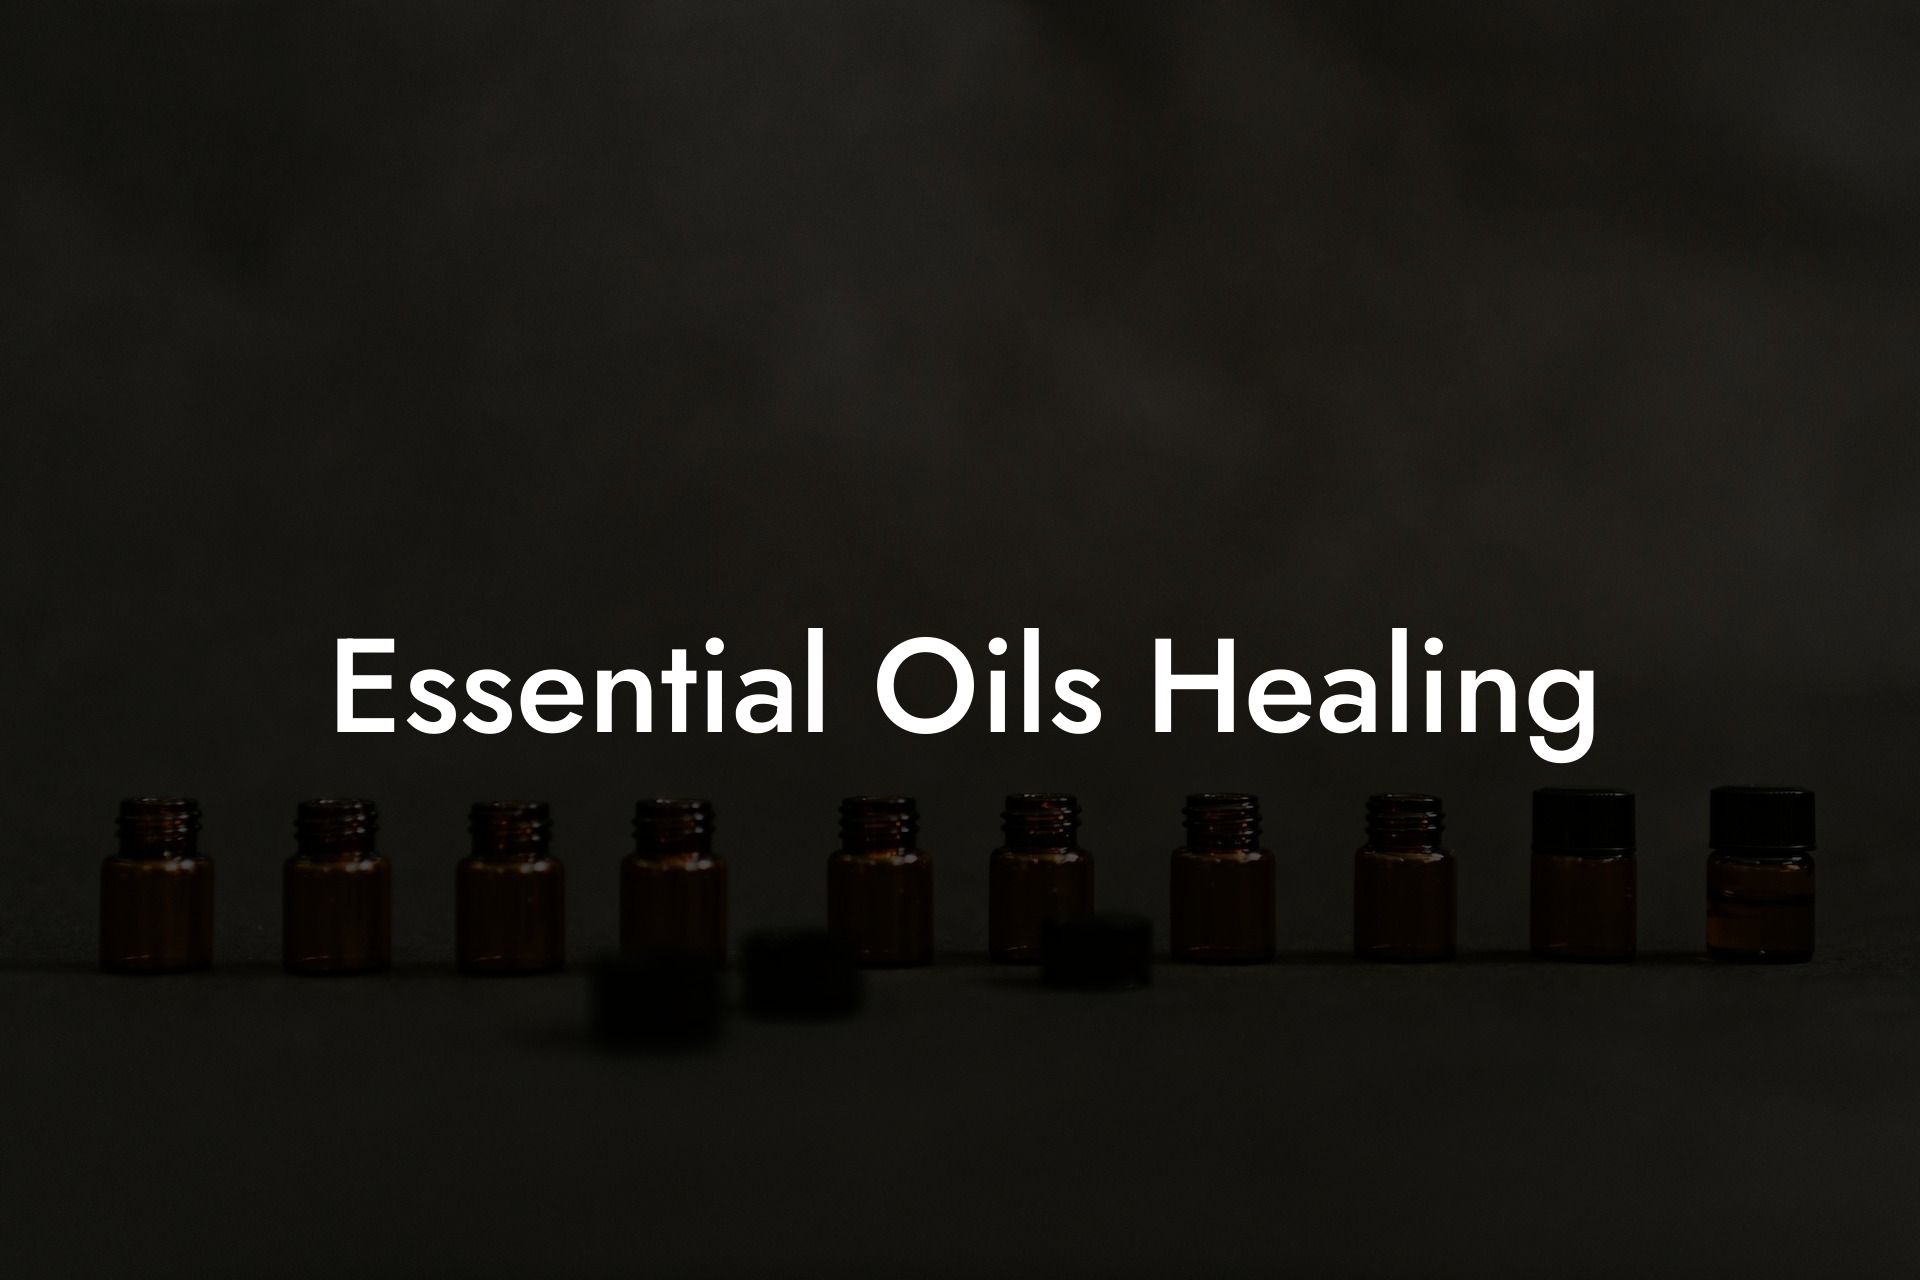 Essential Oils Healing